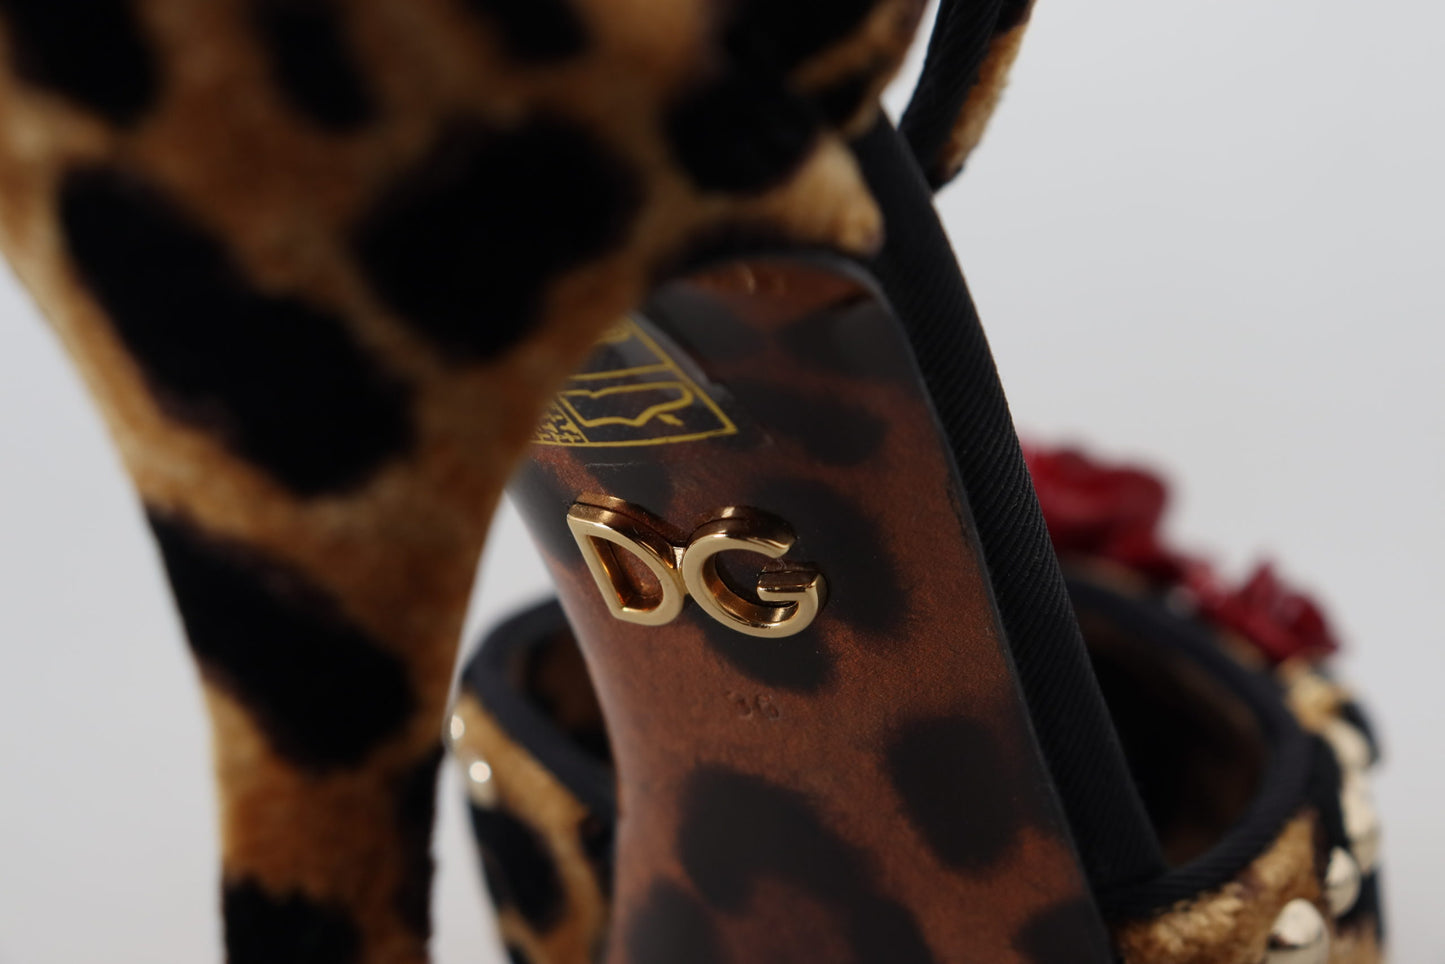 Dolce & Gabbana Brown Embellished Leopard Print Heels Shoes - DEA STILOSA MILANO